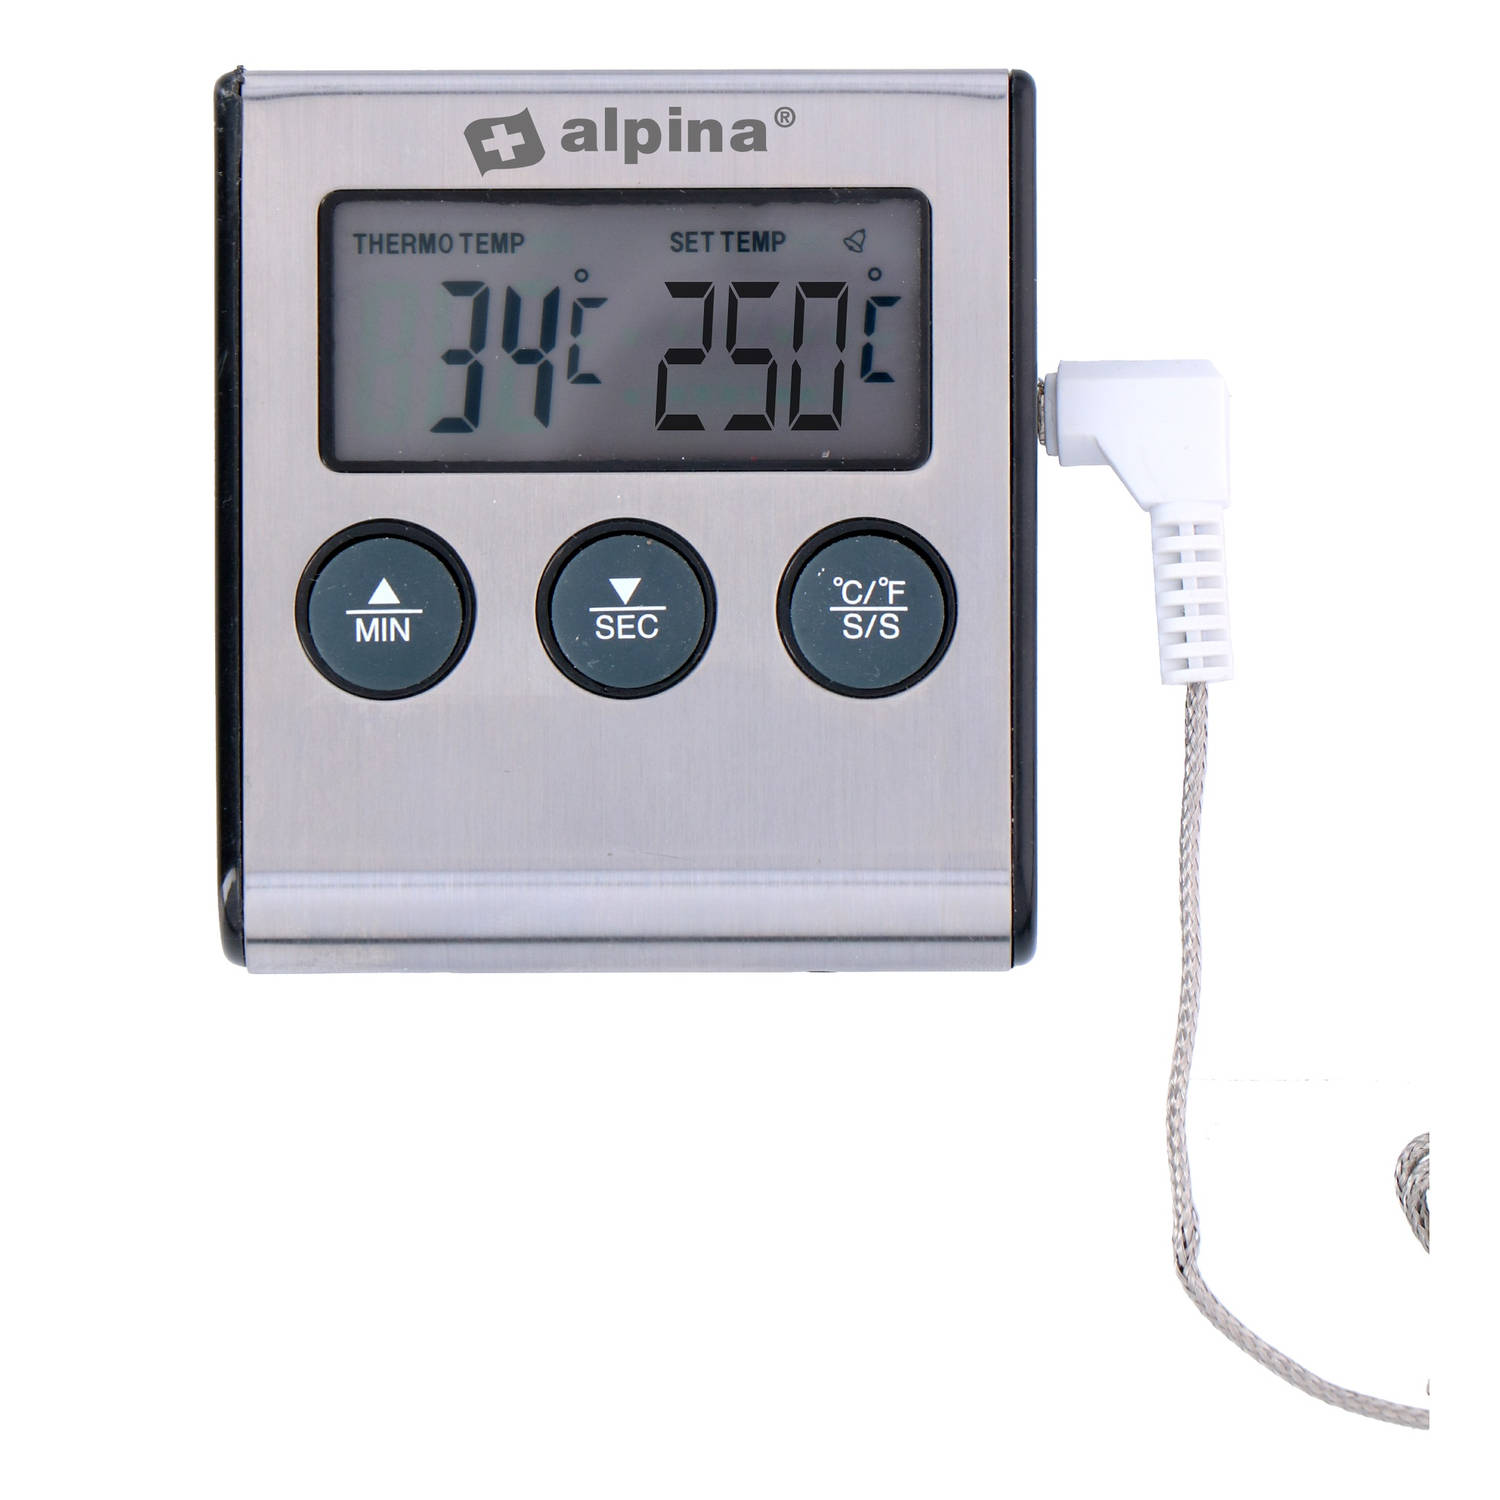 Uitvoerder Leidingen Aas Alpina keuken thermometer - 2 in 1 - digitale thermometer & timer | Blokker